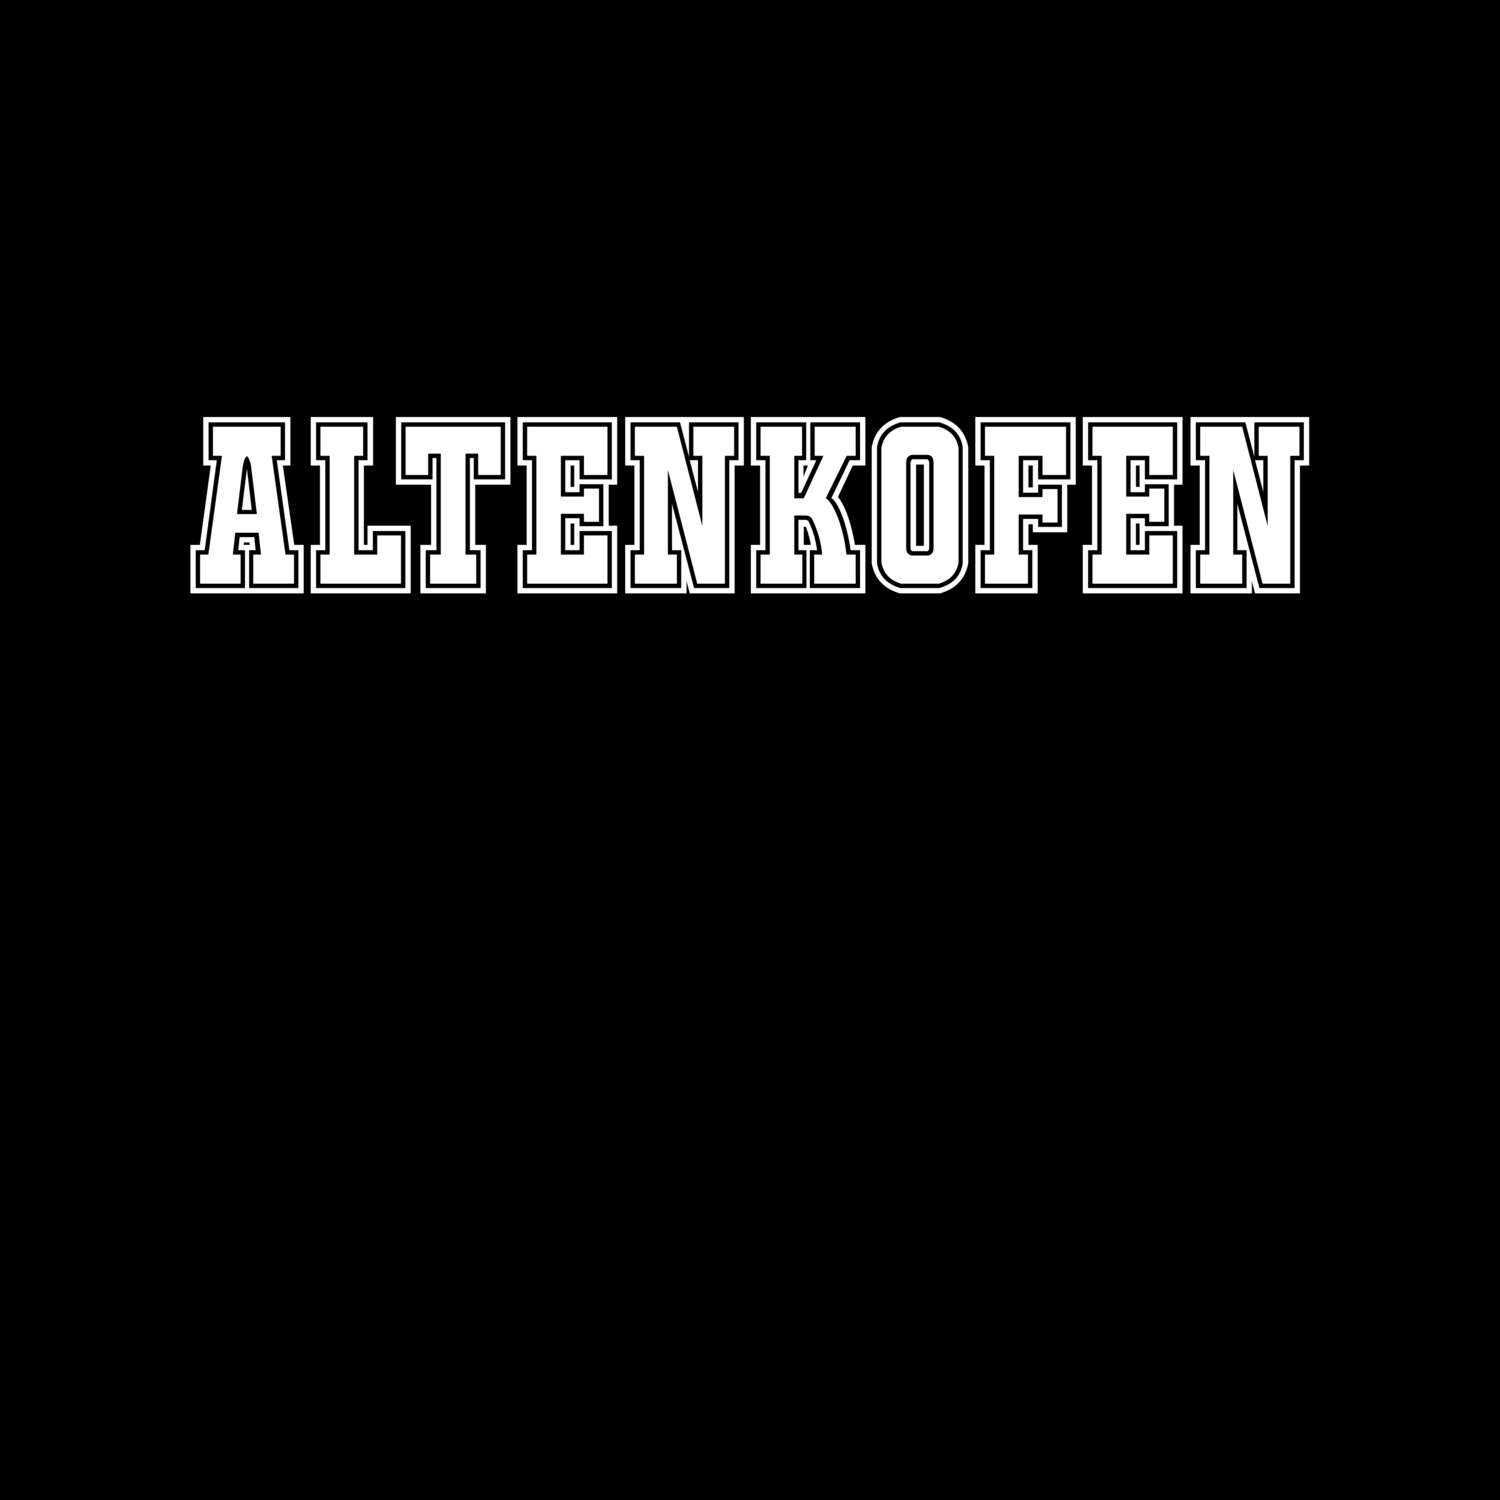 Altenkofen T-Shirt »Classic«